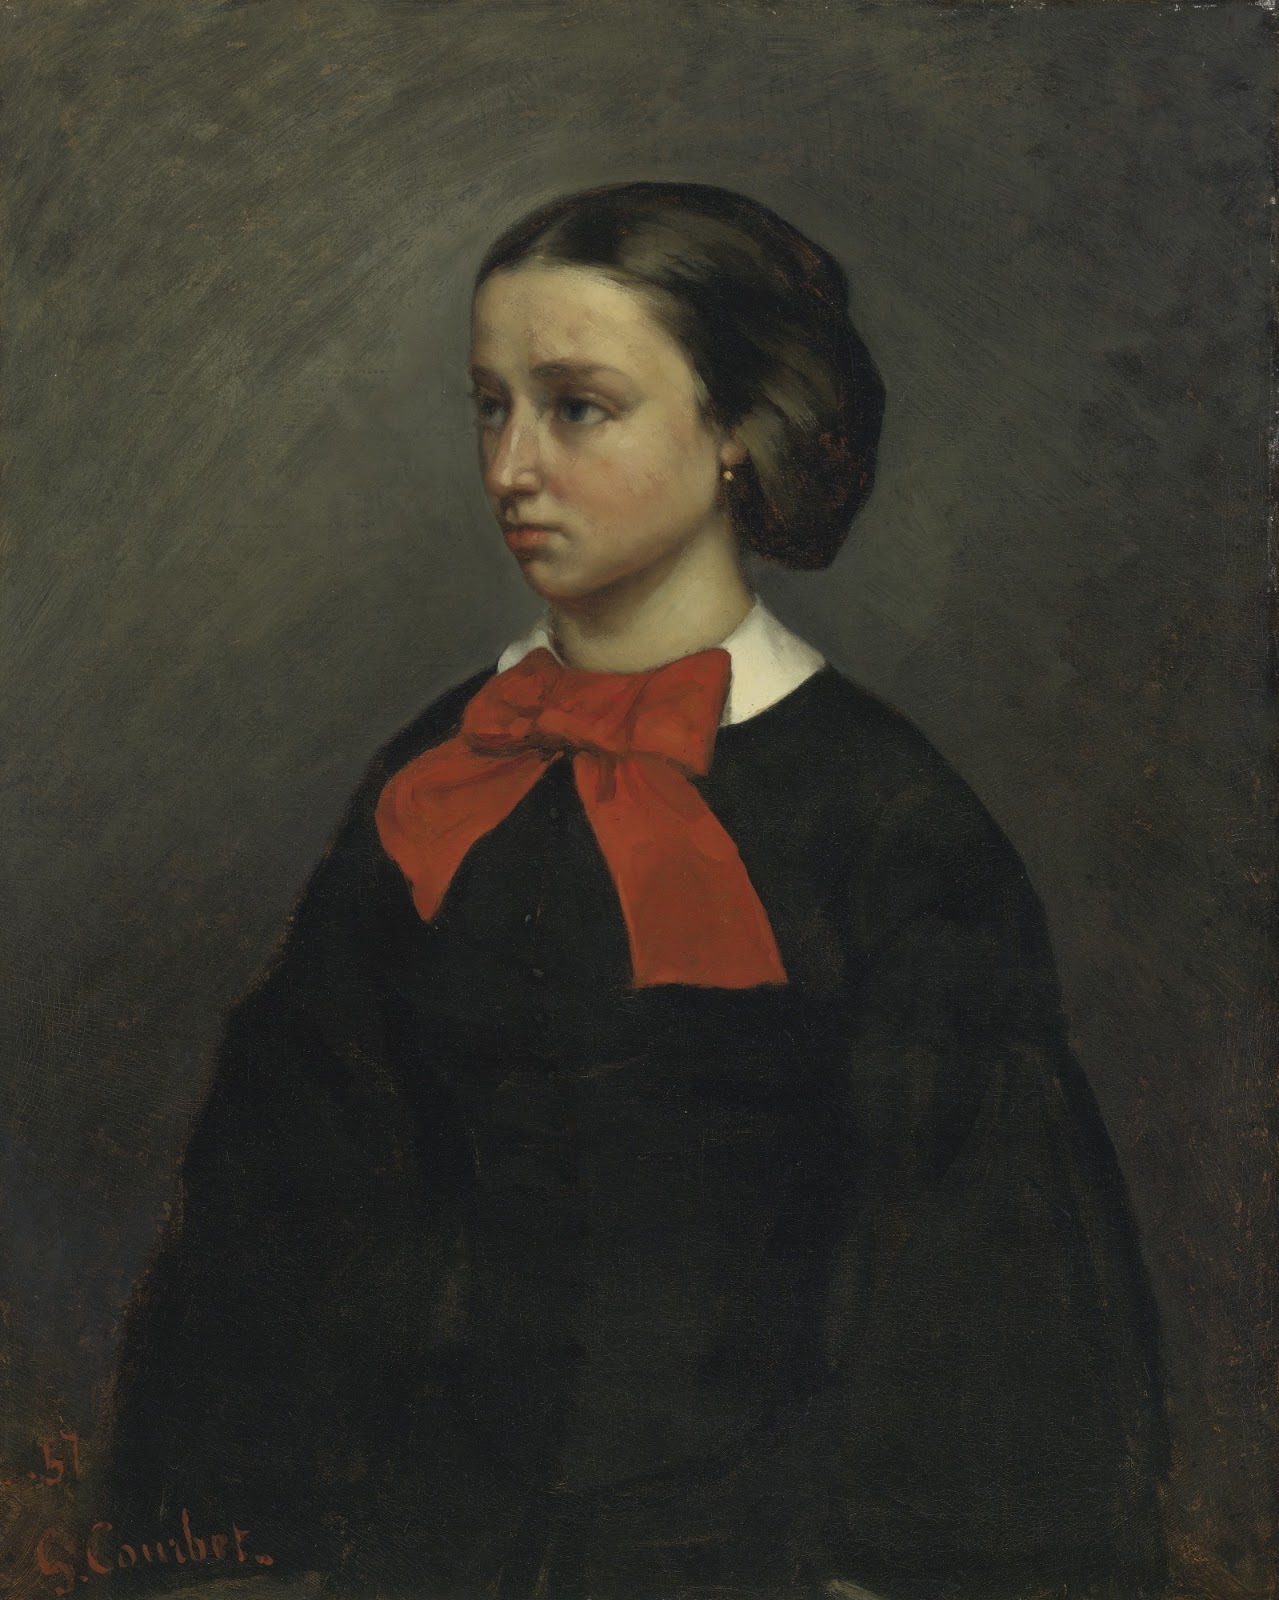 Gustave+Courbet-1819-1877 (89).jpg